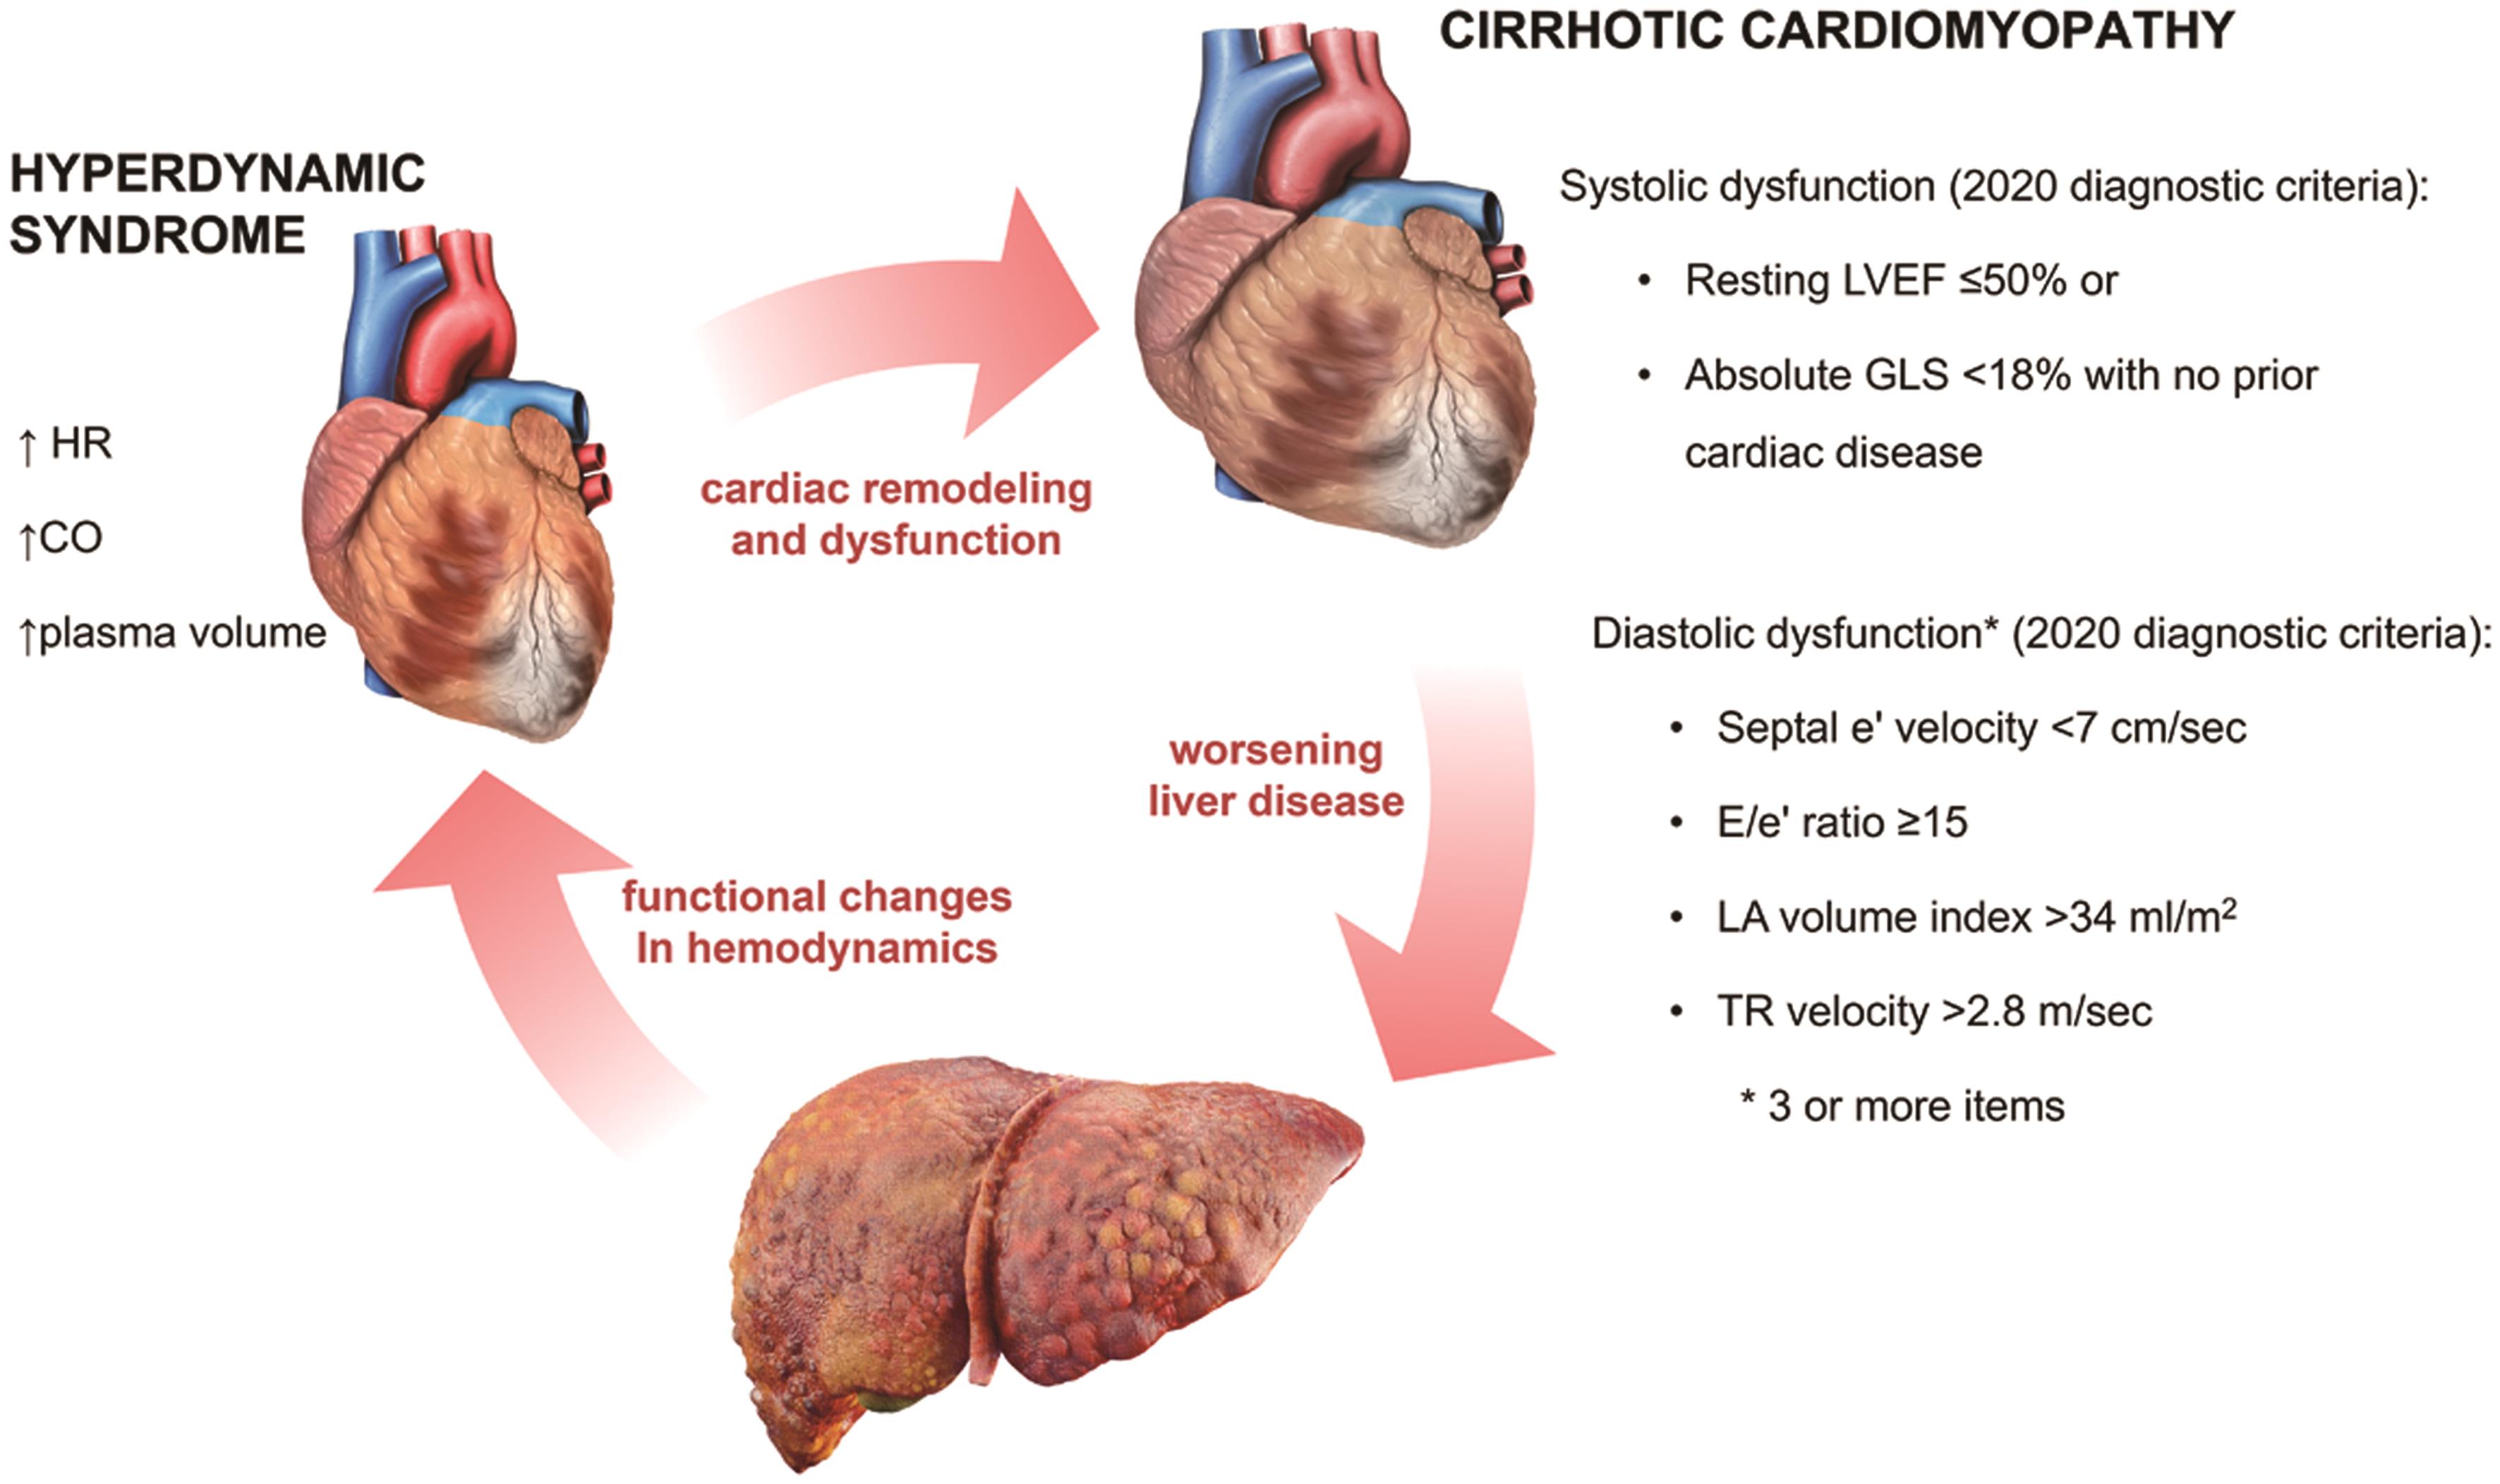 Evolution of cardiac dysfunction from hyperdynamic syndrome to cirrhotic cardiomyopathy.